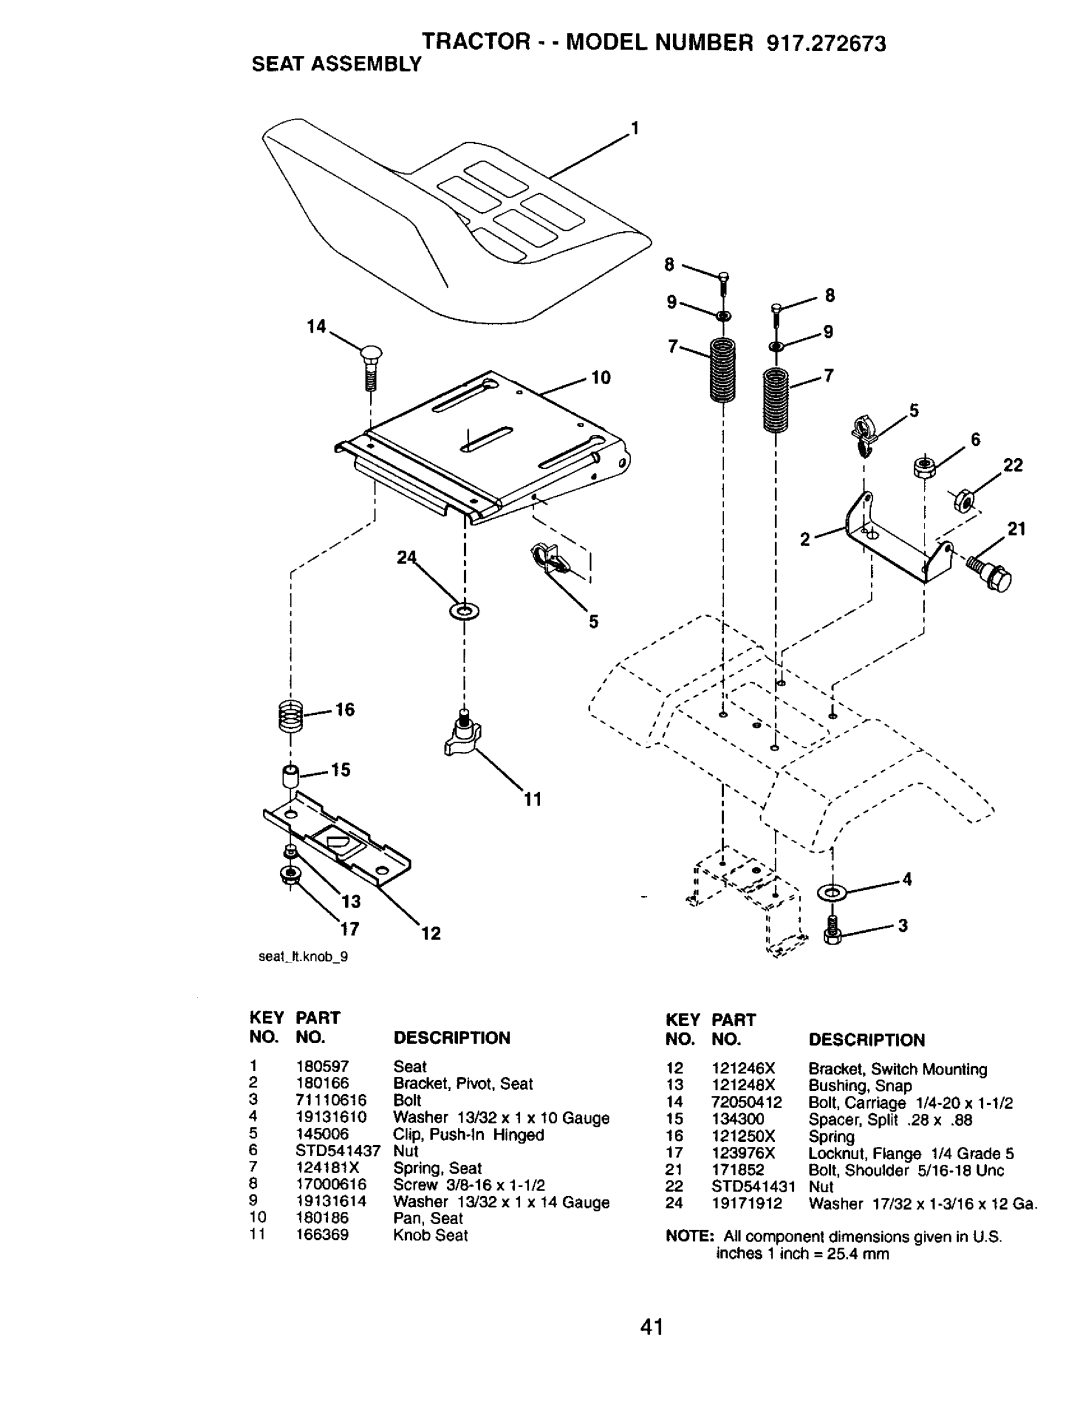 Craftsman 917272673 owner manual TRACTOR - - MODEL NUMBER 917.272673 SEAT ASSEMBLY, Part, Description 